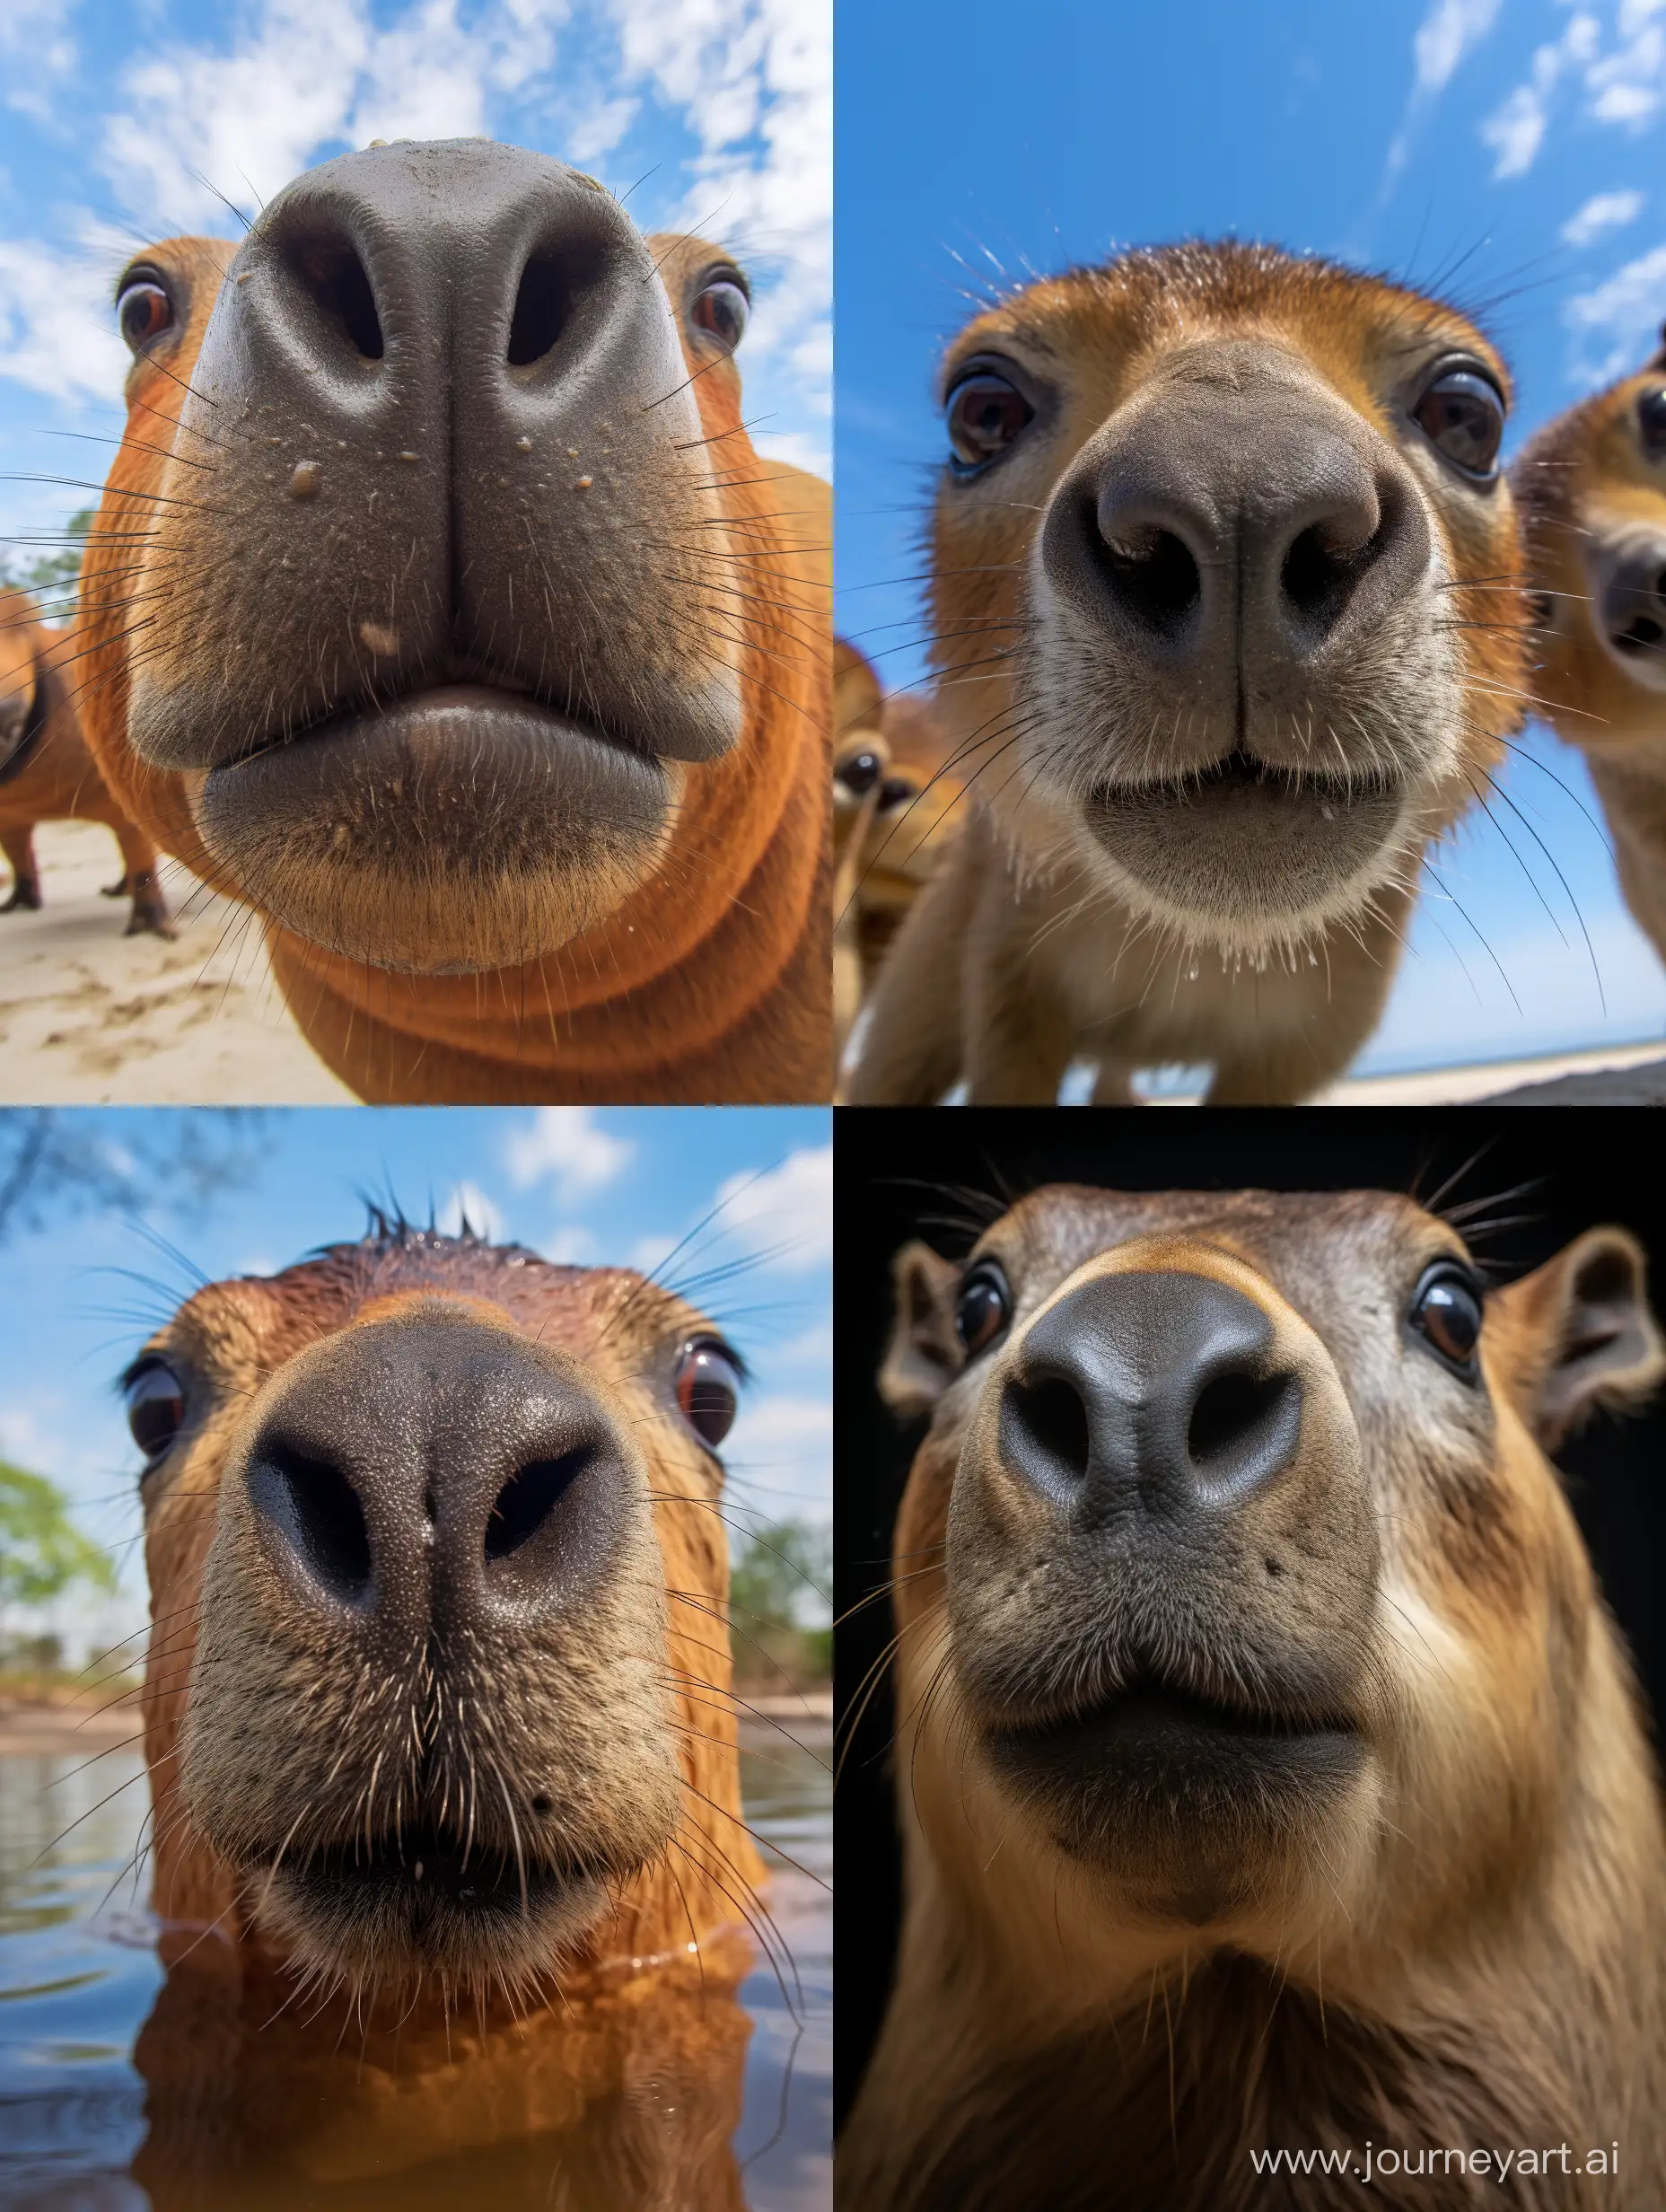 capybara, professional photo, 15mm,f/2.8,1/500s, iso2000, bottom-up view, full face, высокая детализация, крупный план